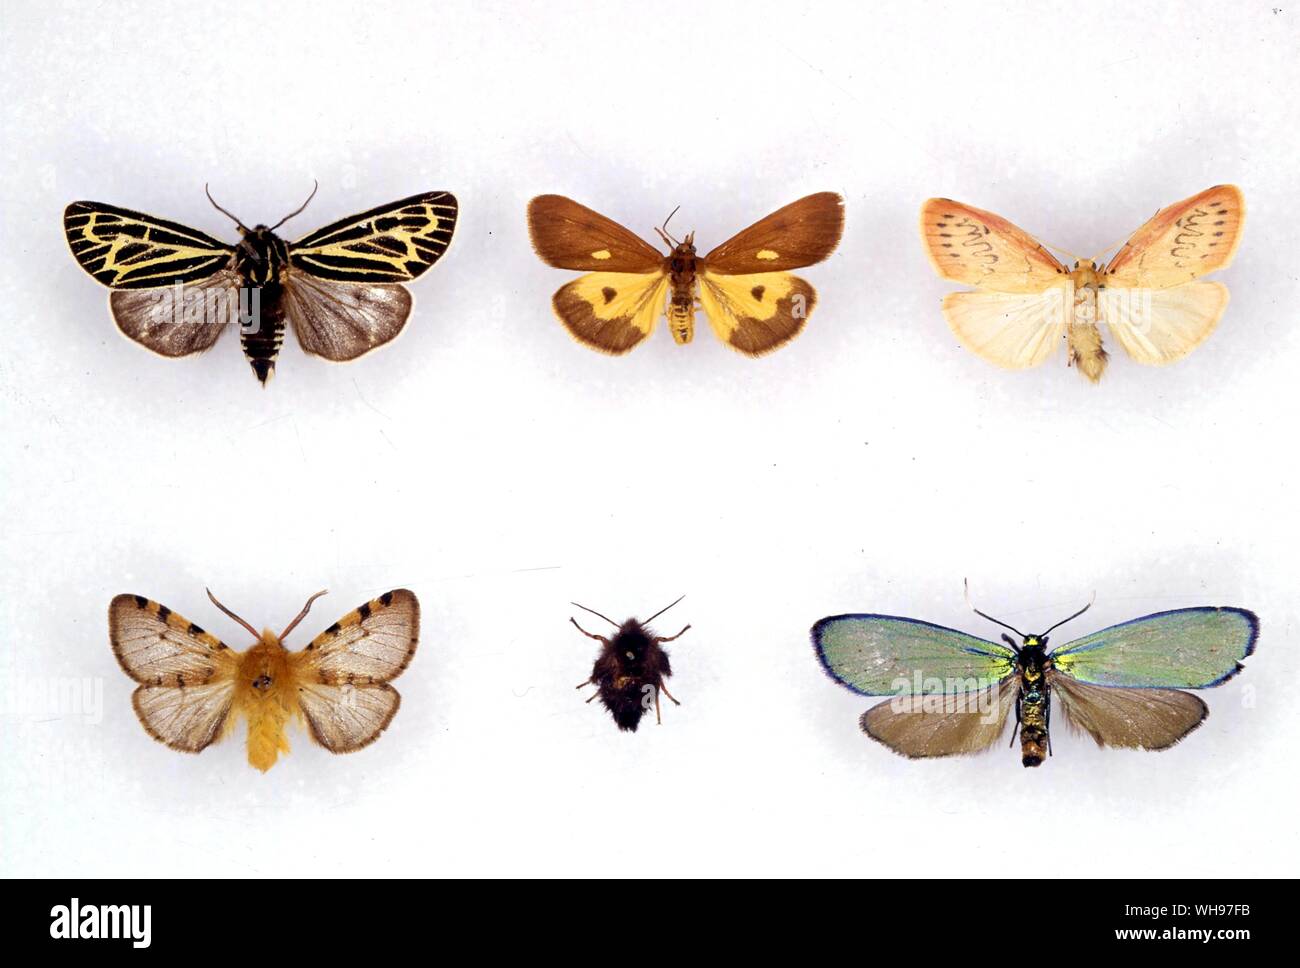 Butterflies/moths - (left to right) Apantesis quenseli, Holomelina lamae, Miltochrista miniata, Ocnogyna leprieuri (male), Ocnogyna leprieuri (female), Chrysochlorosia splendida Stock Photo